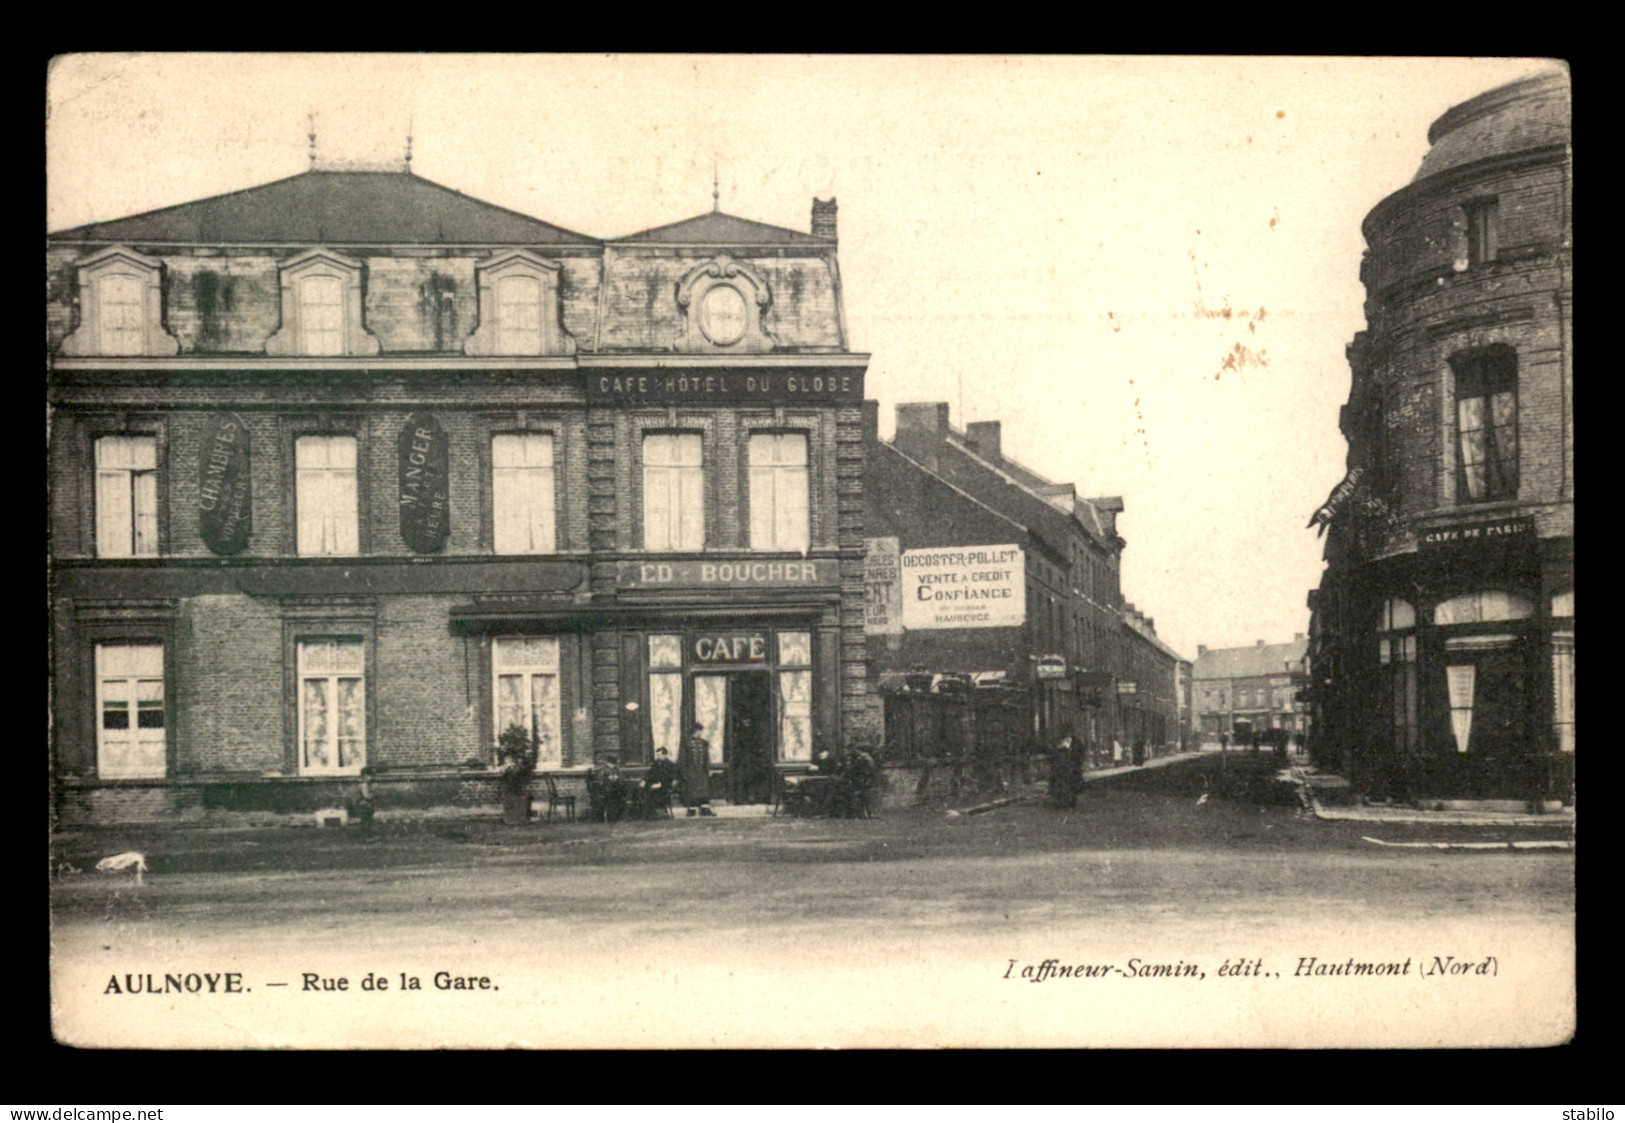 59 - AULNOYE - RUE DE LA GARE - CAFE-HOTEL DU GLOBE,  ED. BOUCHER - Aulnoye